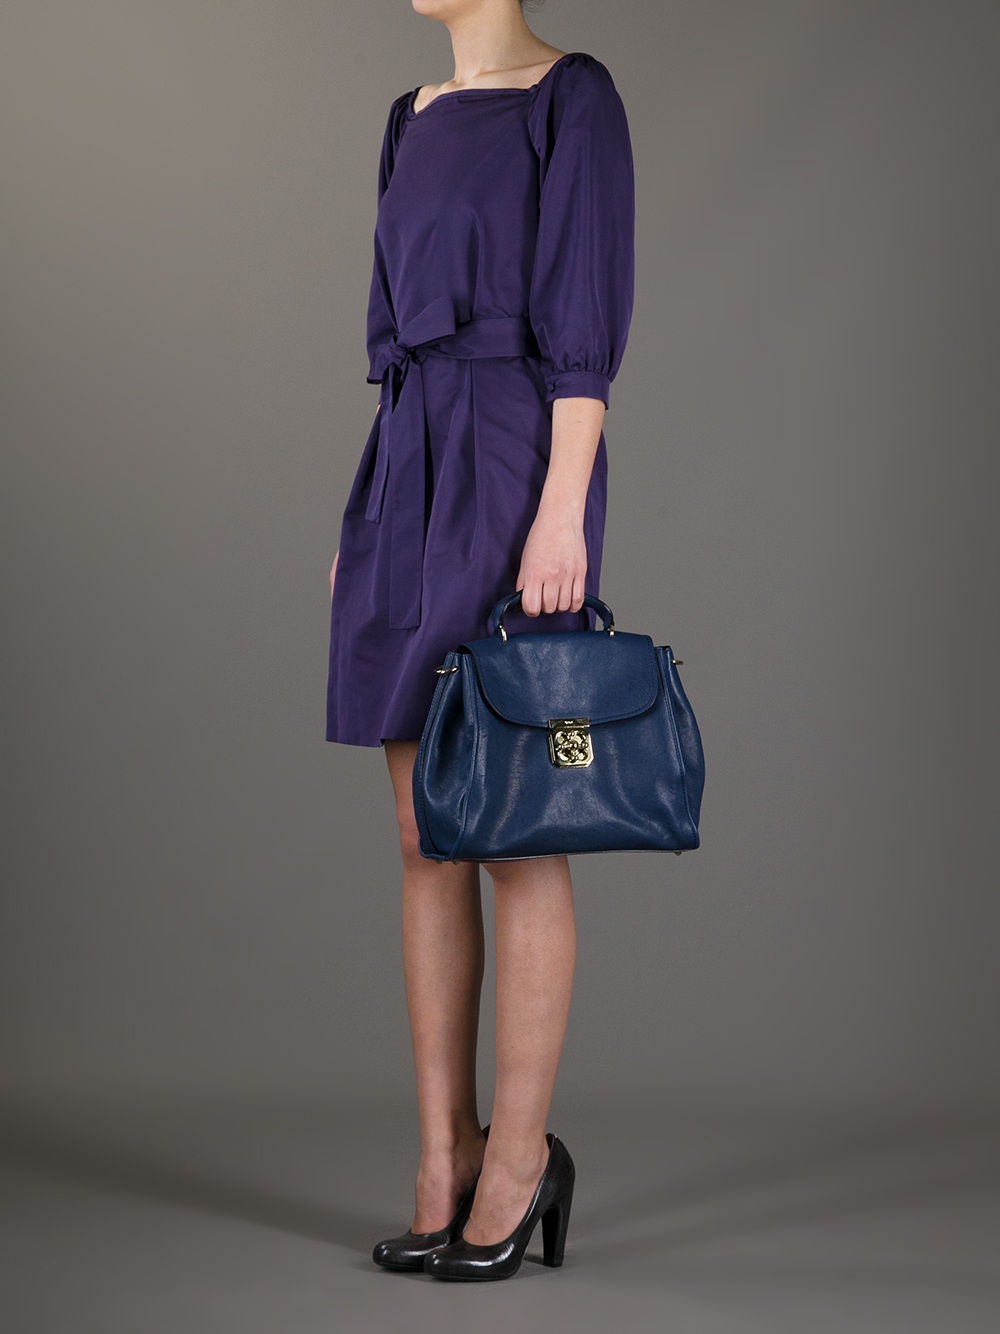 chloe red purse - chloe blue patent leather handbag elsie